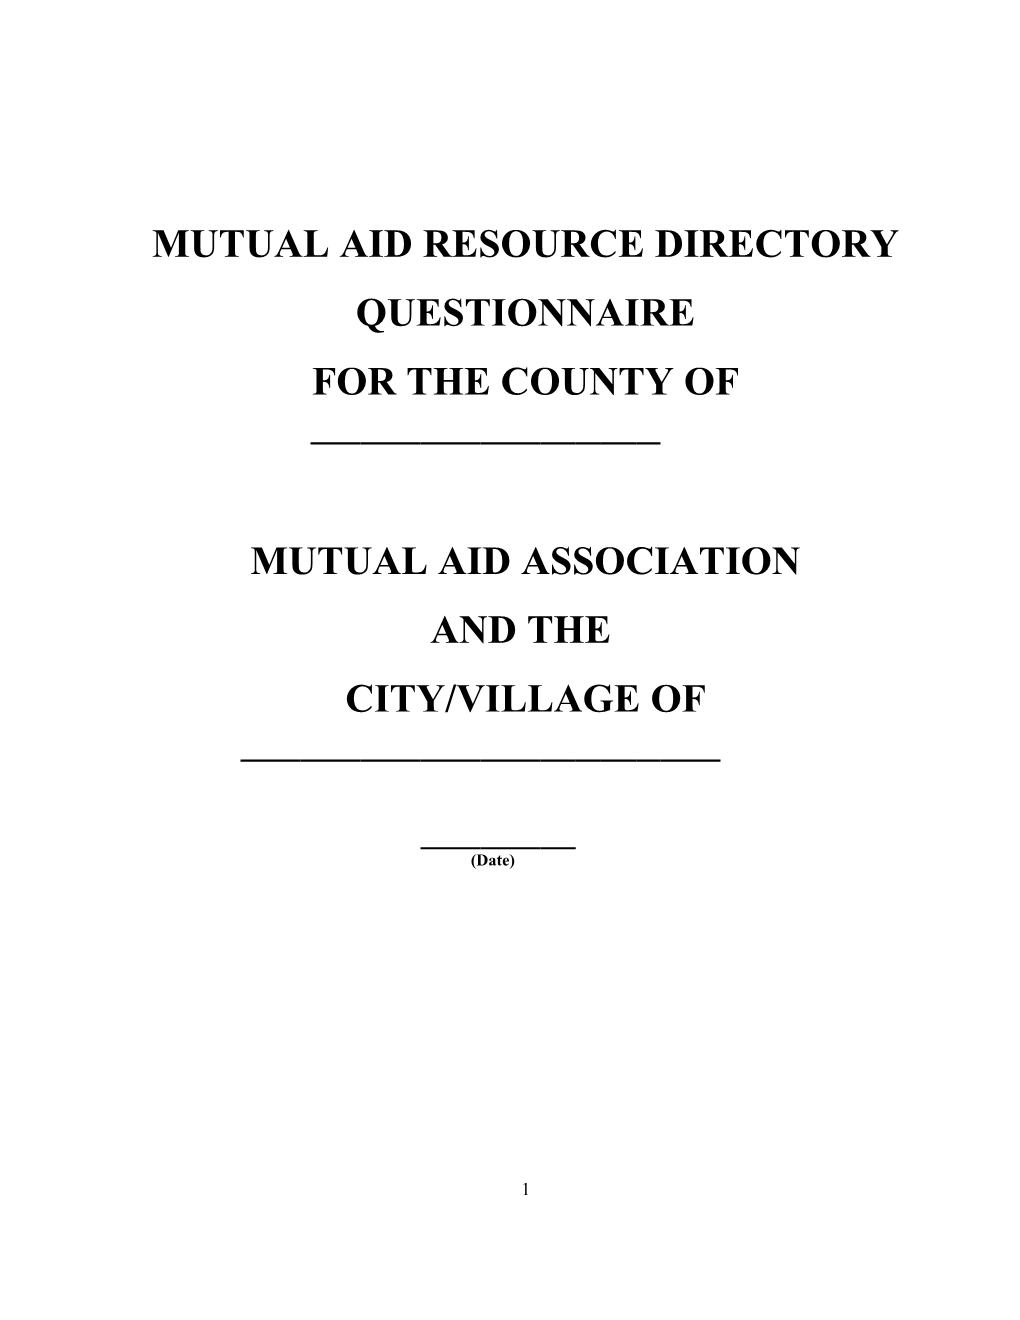 Mutual Aid Resource Dir Form